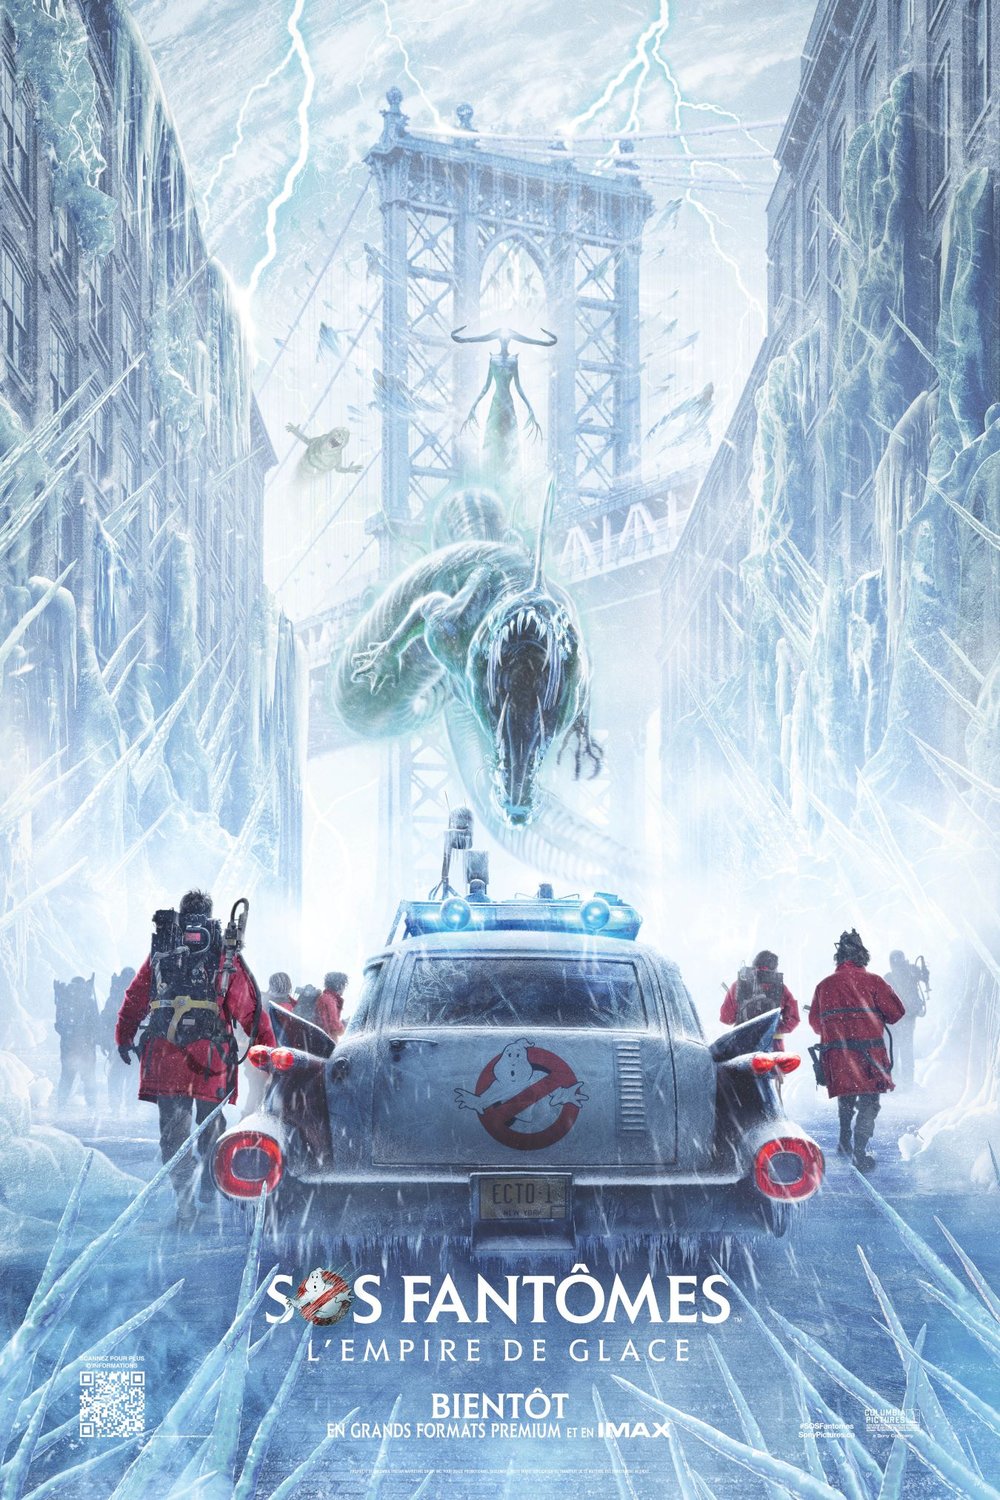 Poster of the movie SOS Fantômes: L'empire de glace